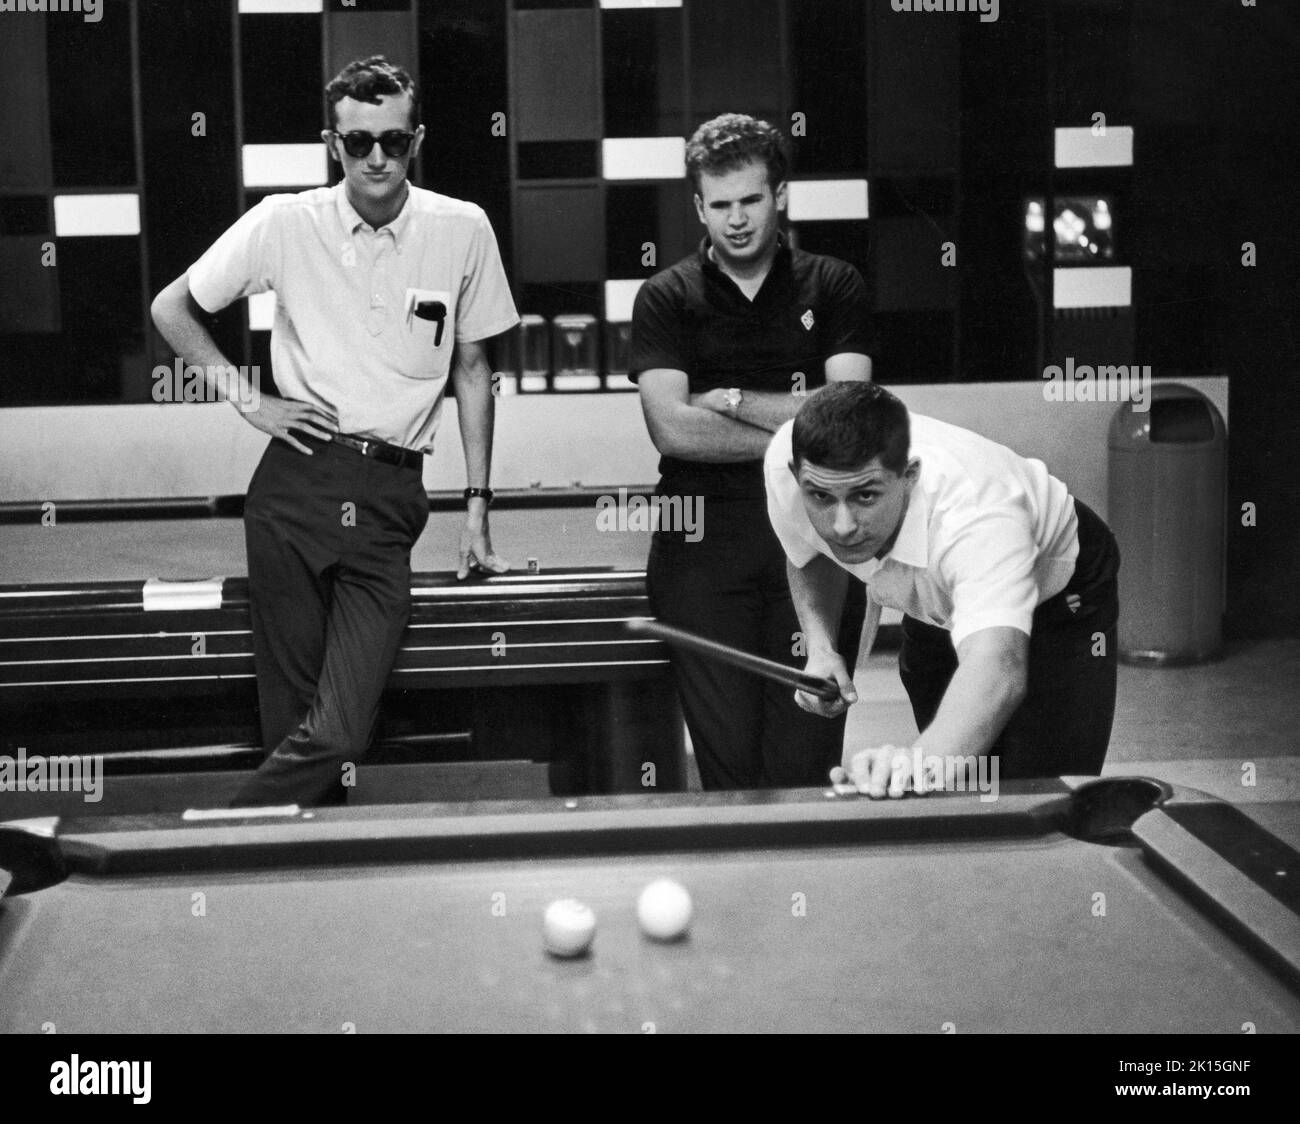 Joueurs dans une salle de billard du New Jersey en 1963. Banque D'Images